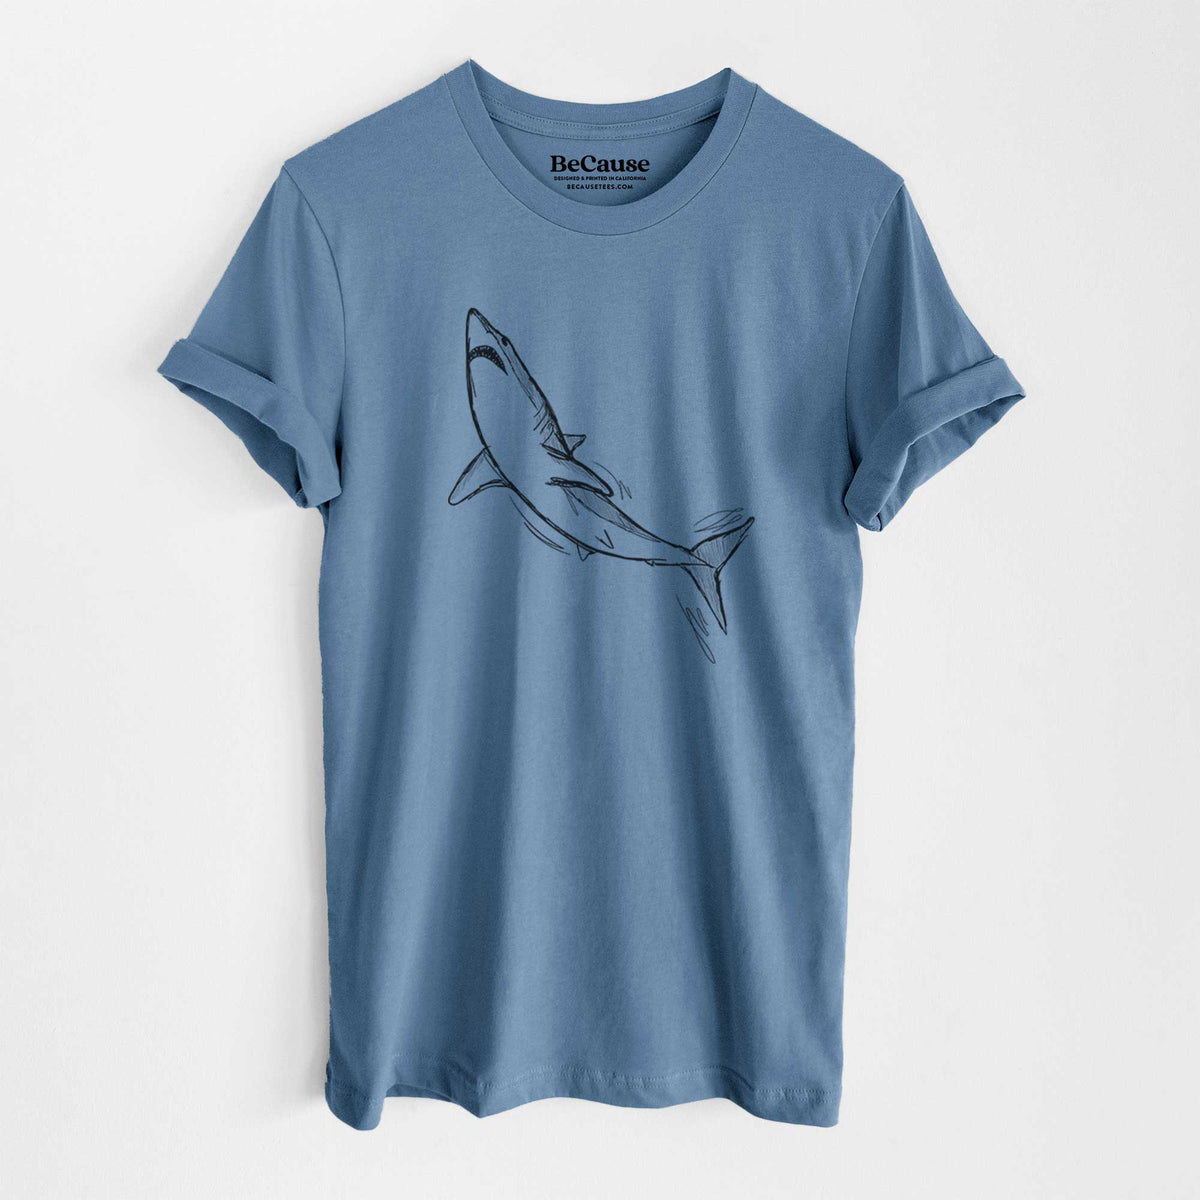 Shortfin Mako Shark - Lightweight 100% Cotton Unisex Crewneck